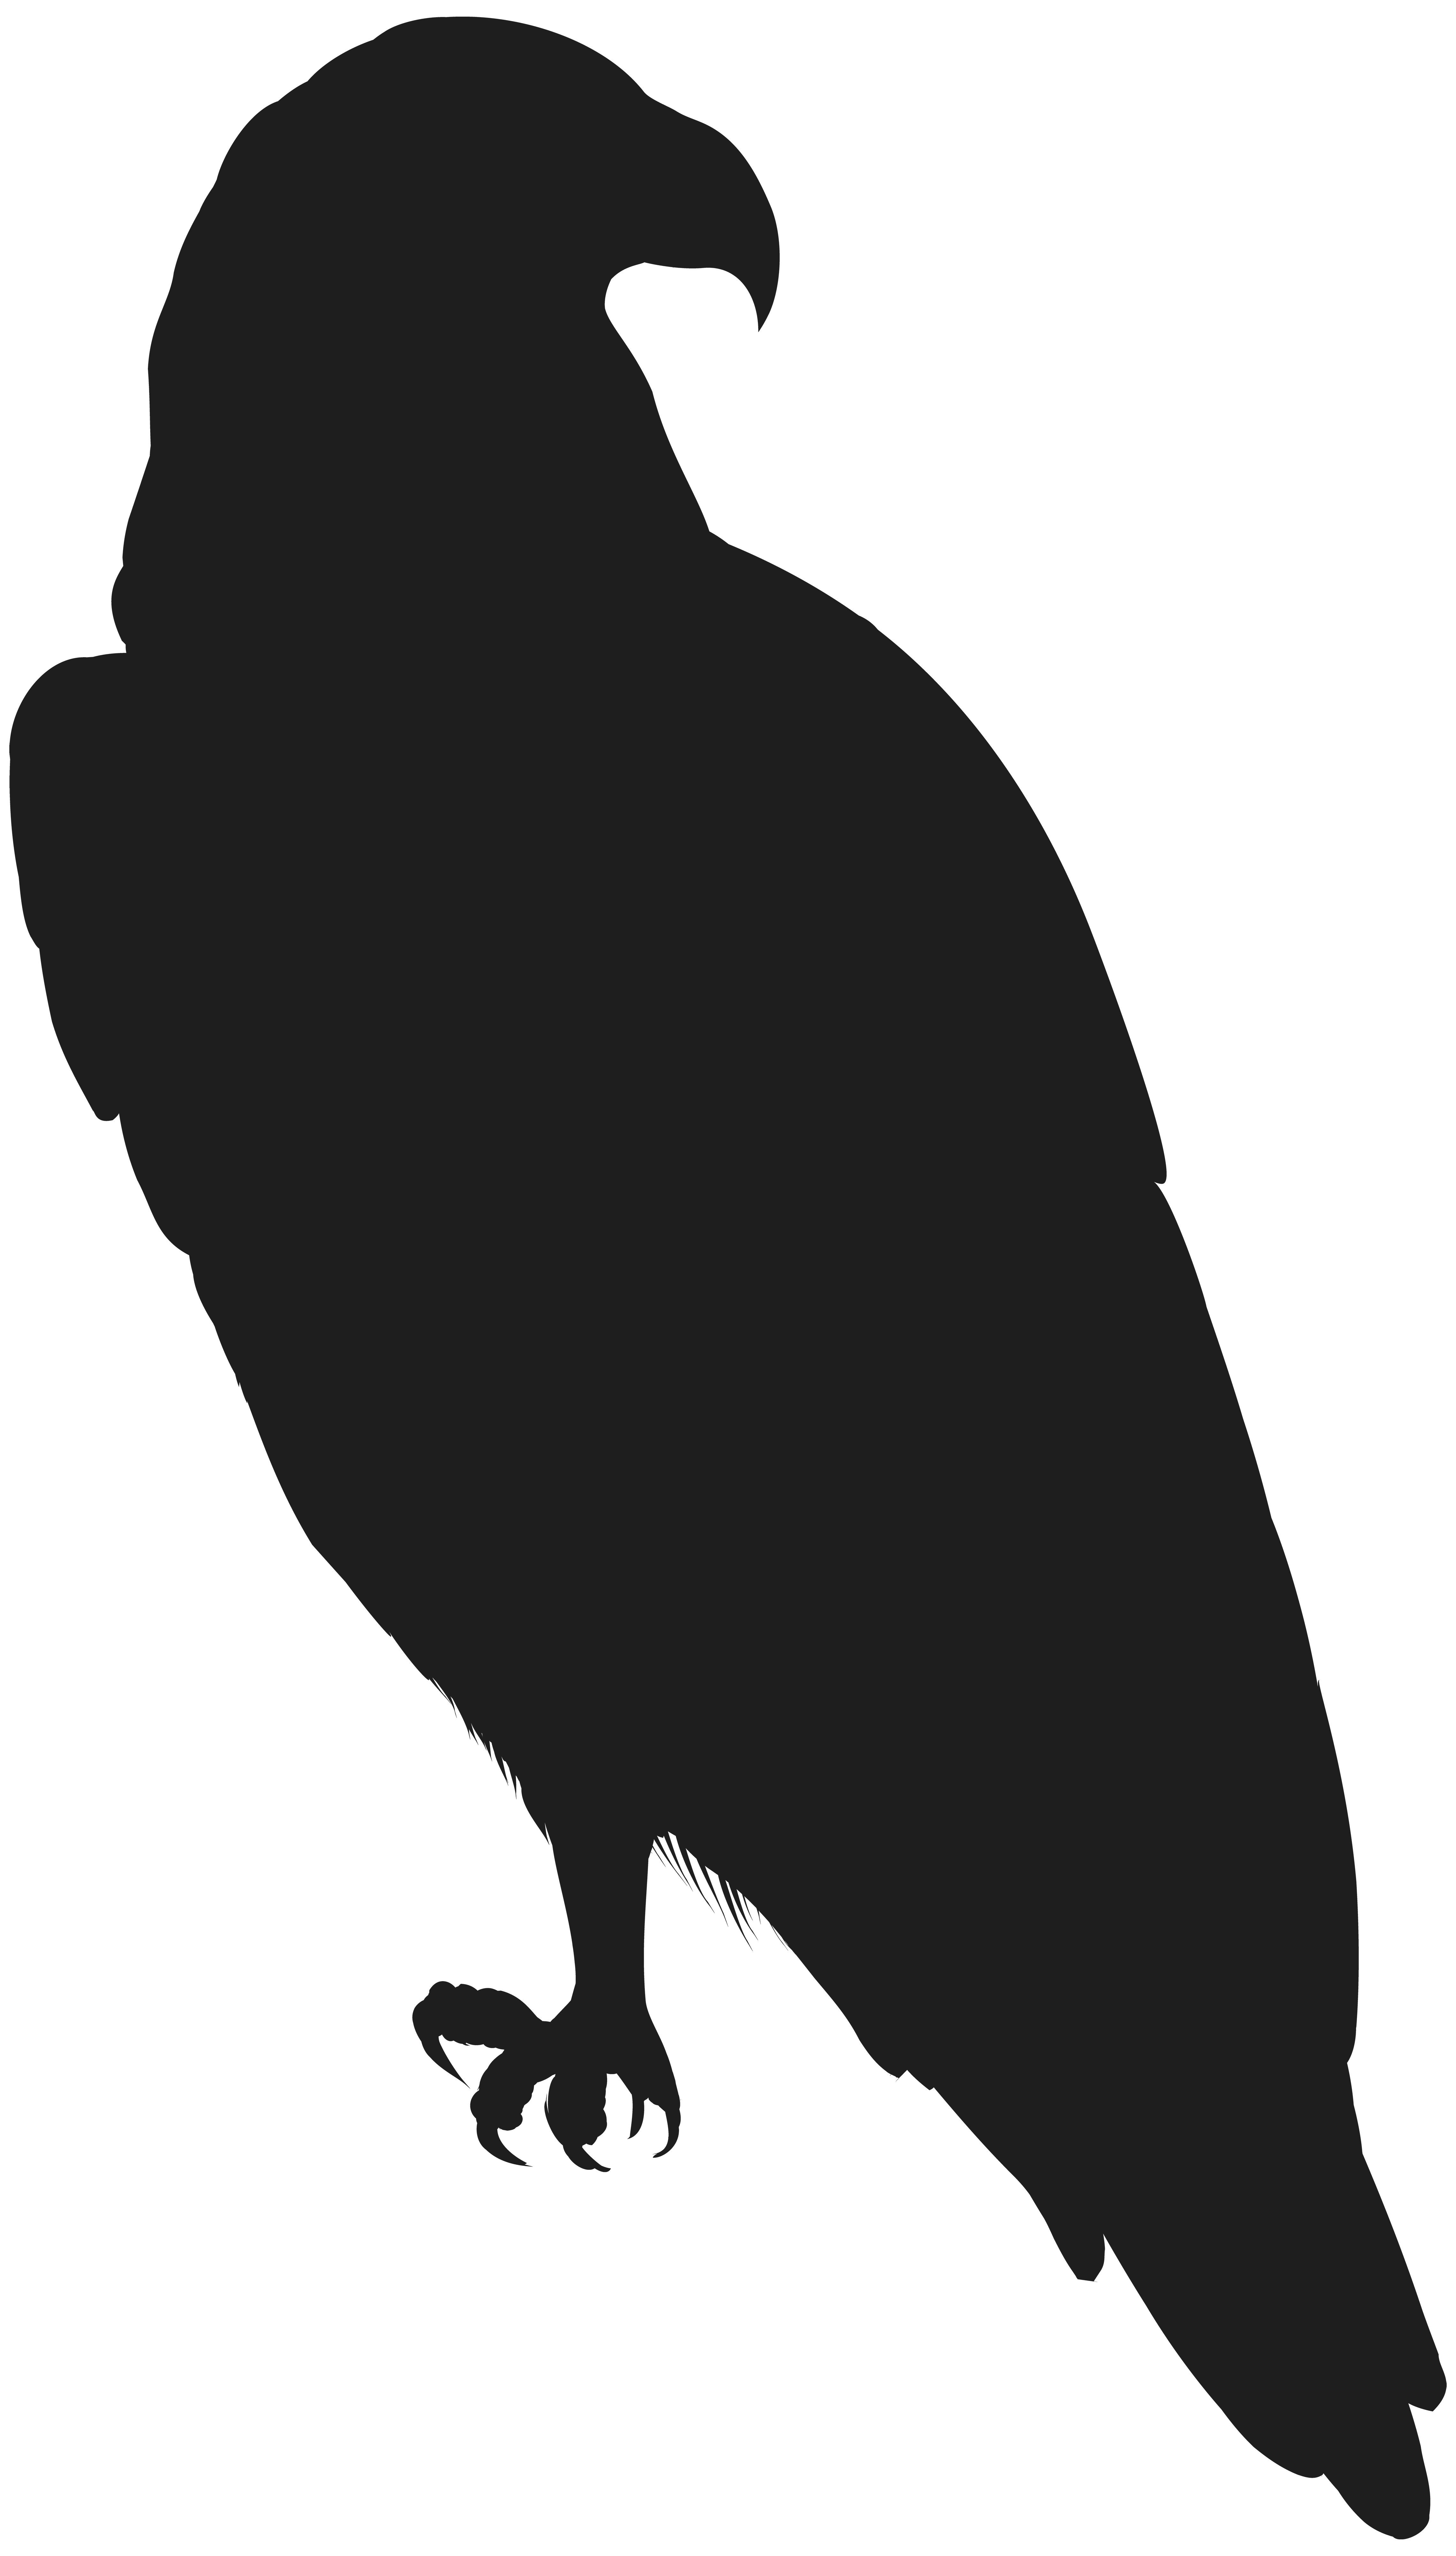 Rose Clip art - Eagle PNG Clip Art Image png download ... - Eagle Scout Silhouette